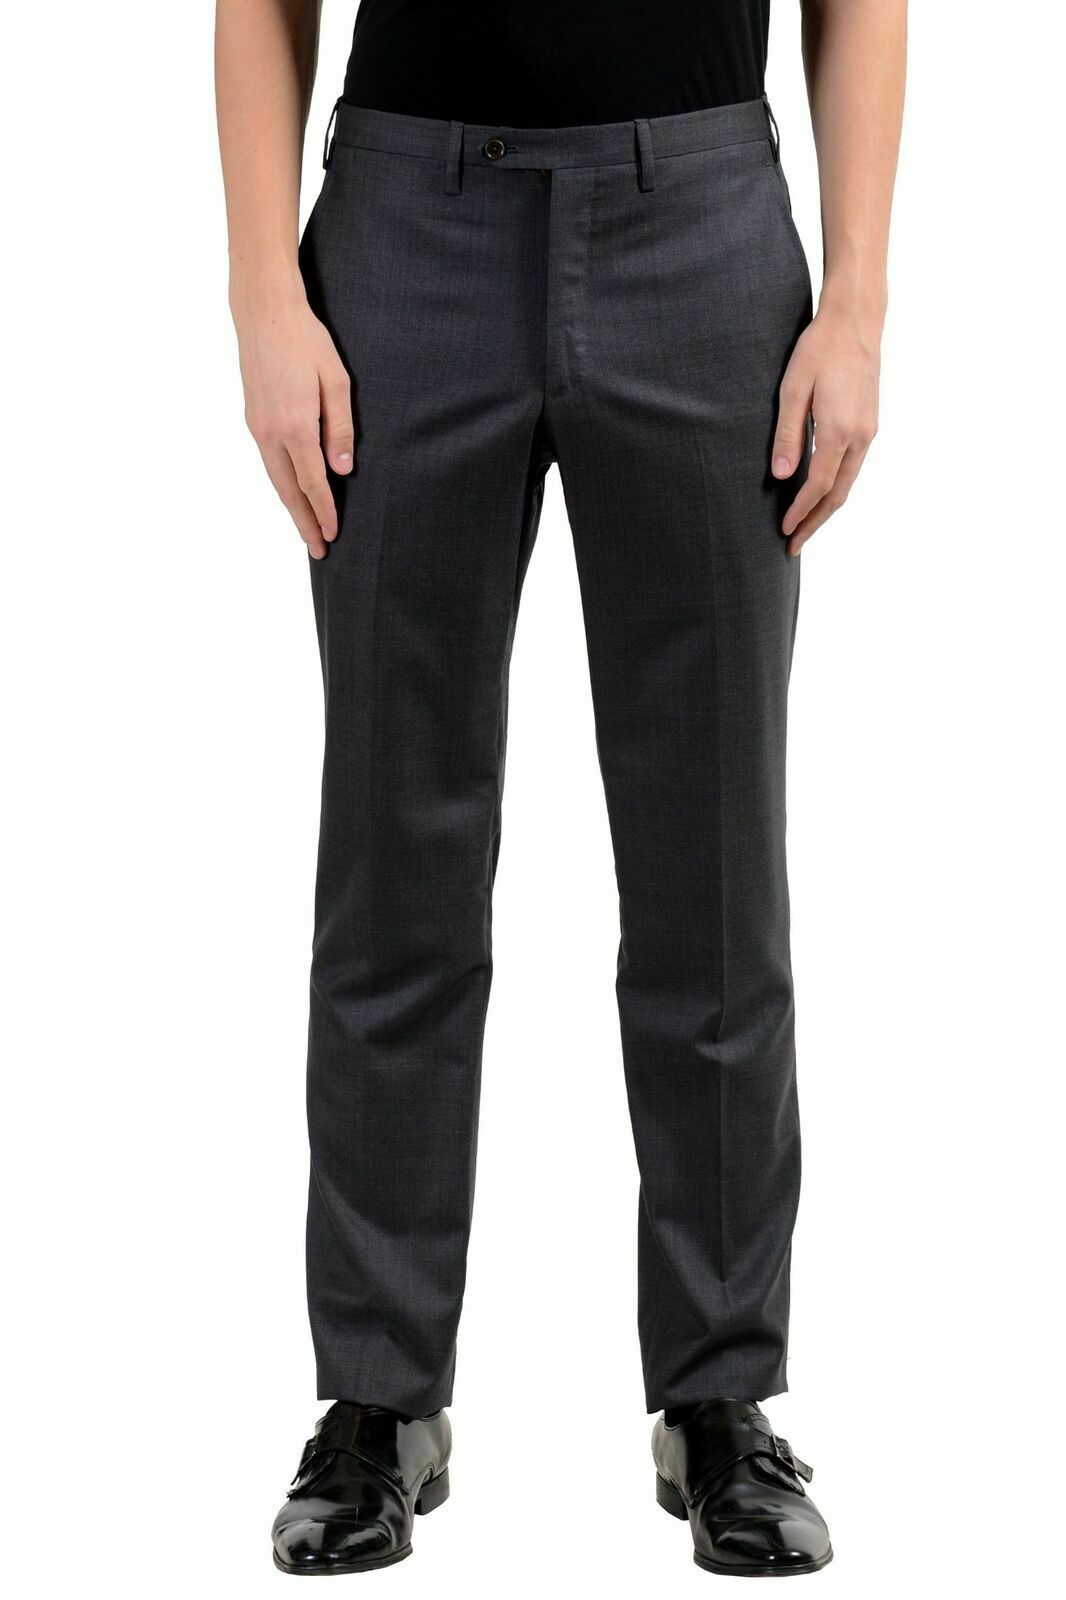 NEW Kiton Cly//Elastane Men/'s 5-Pocket Pants//Jeans Light Redwood 33US//49EU